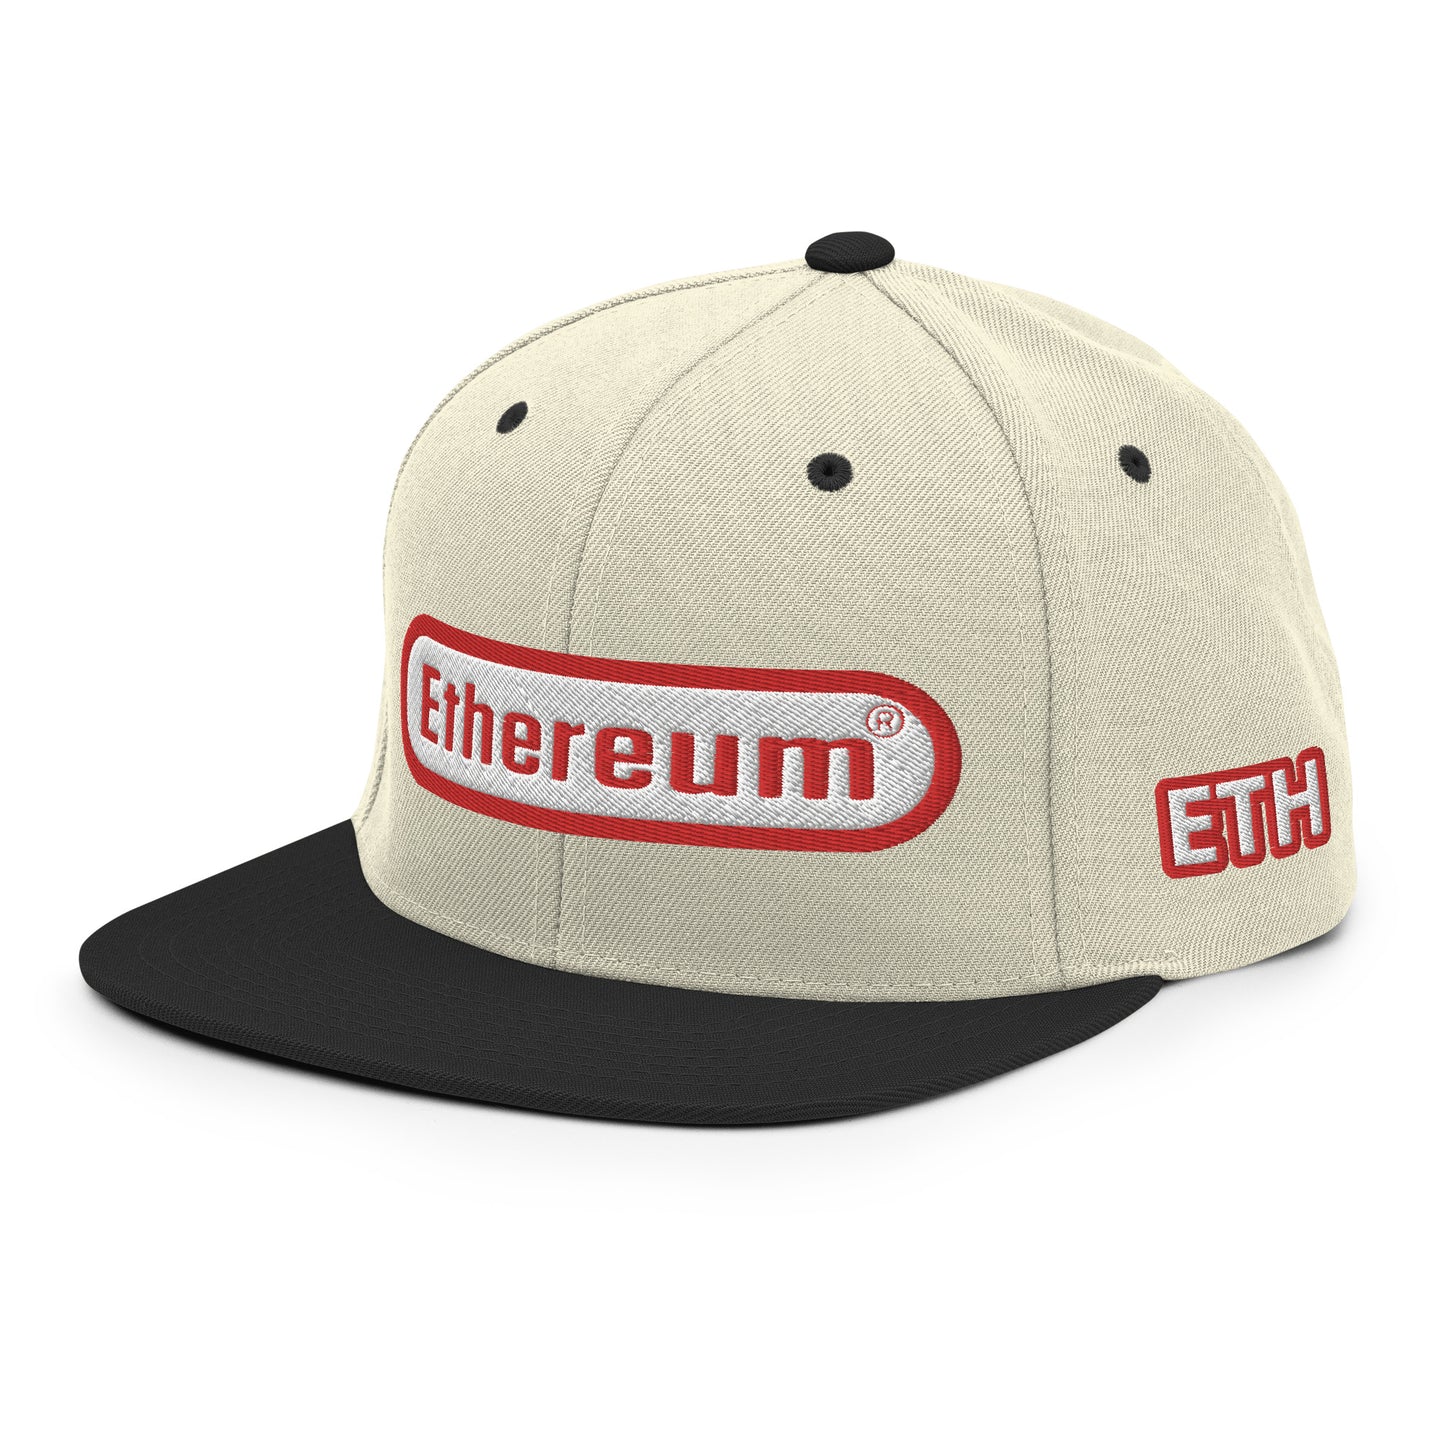 Ethereum Console Hat